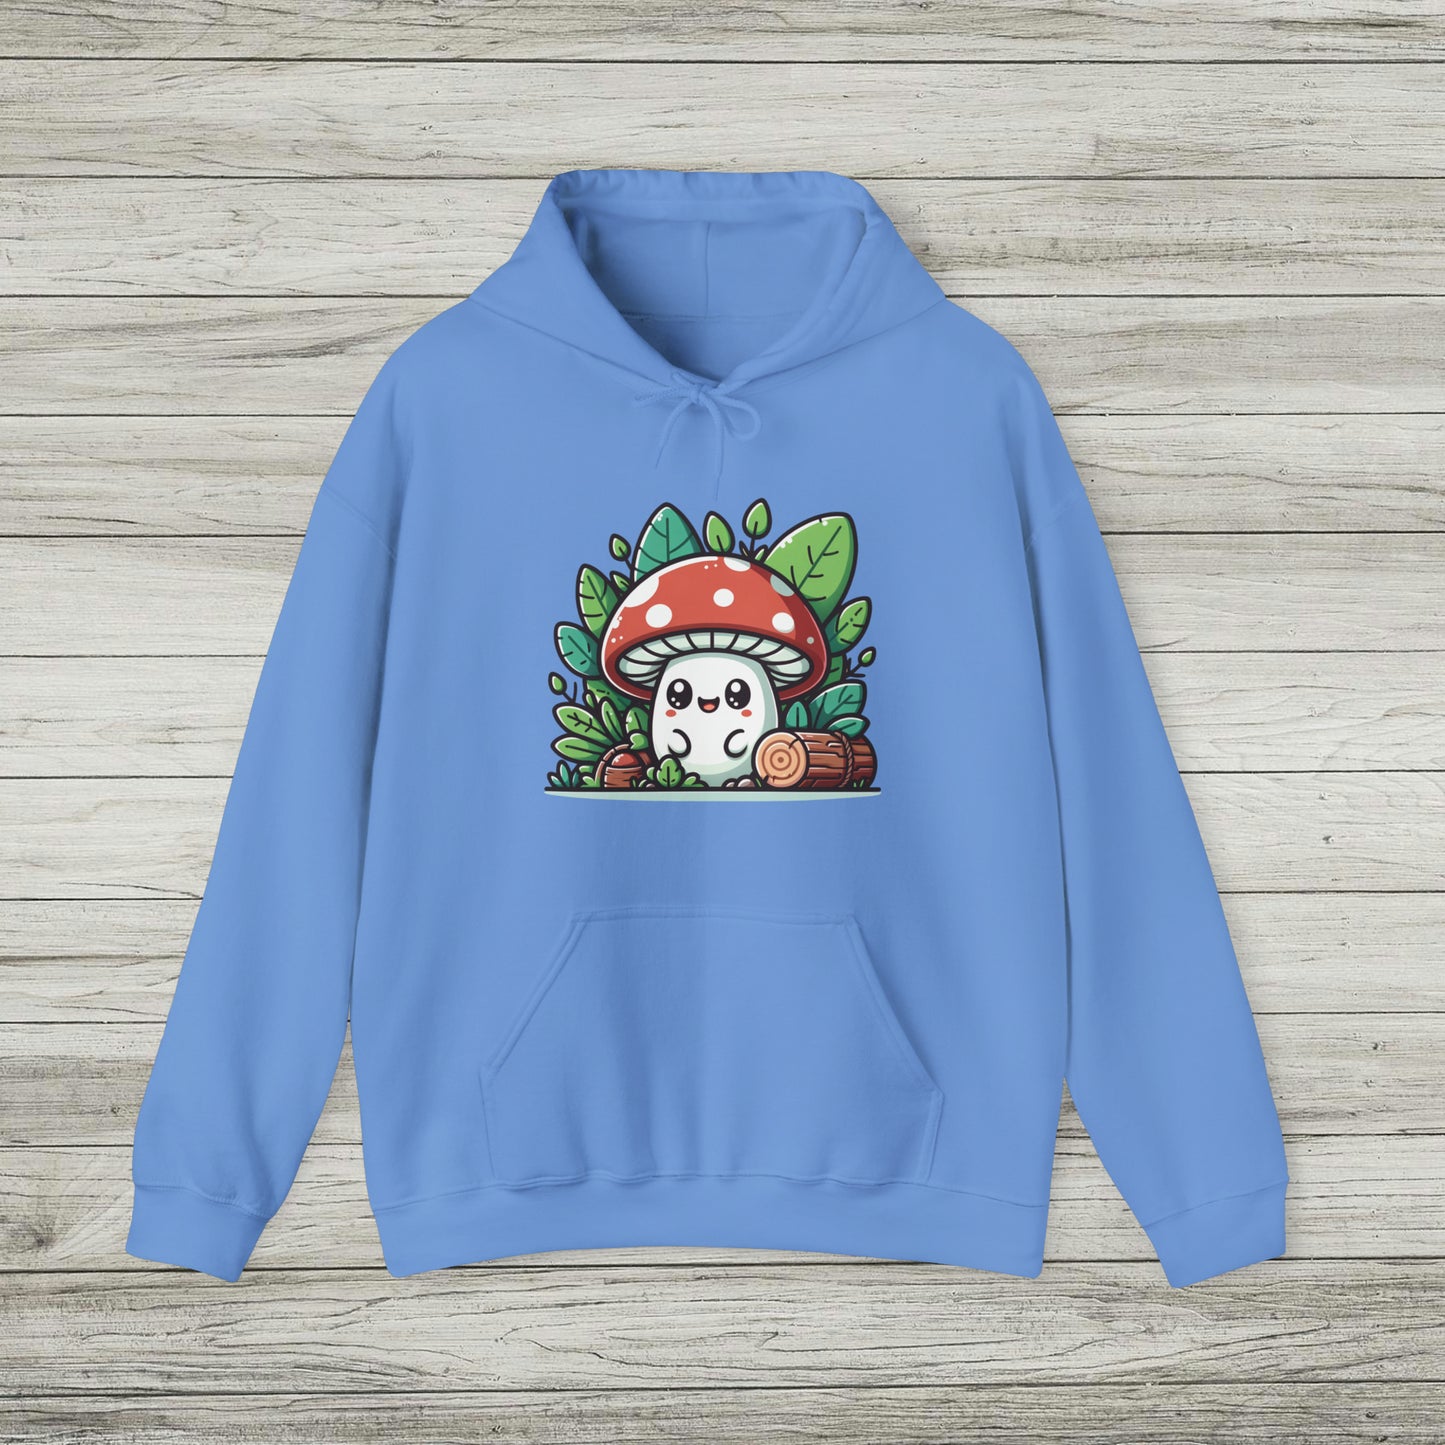 Happy Mushroom Hoodie, Shroom in the Forest Hooded Sweatshirt, Retro Hippie Fungi Shirt